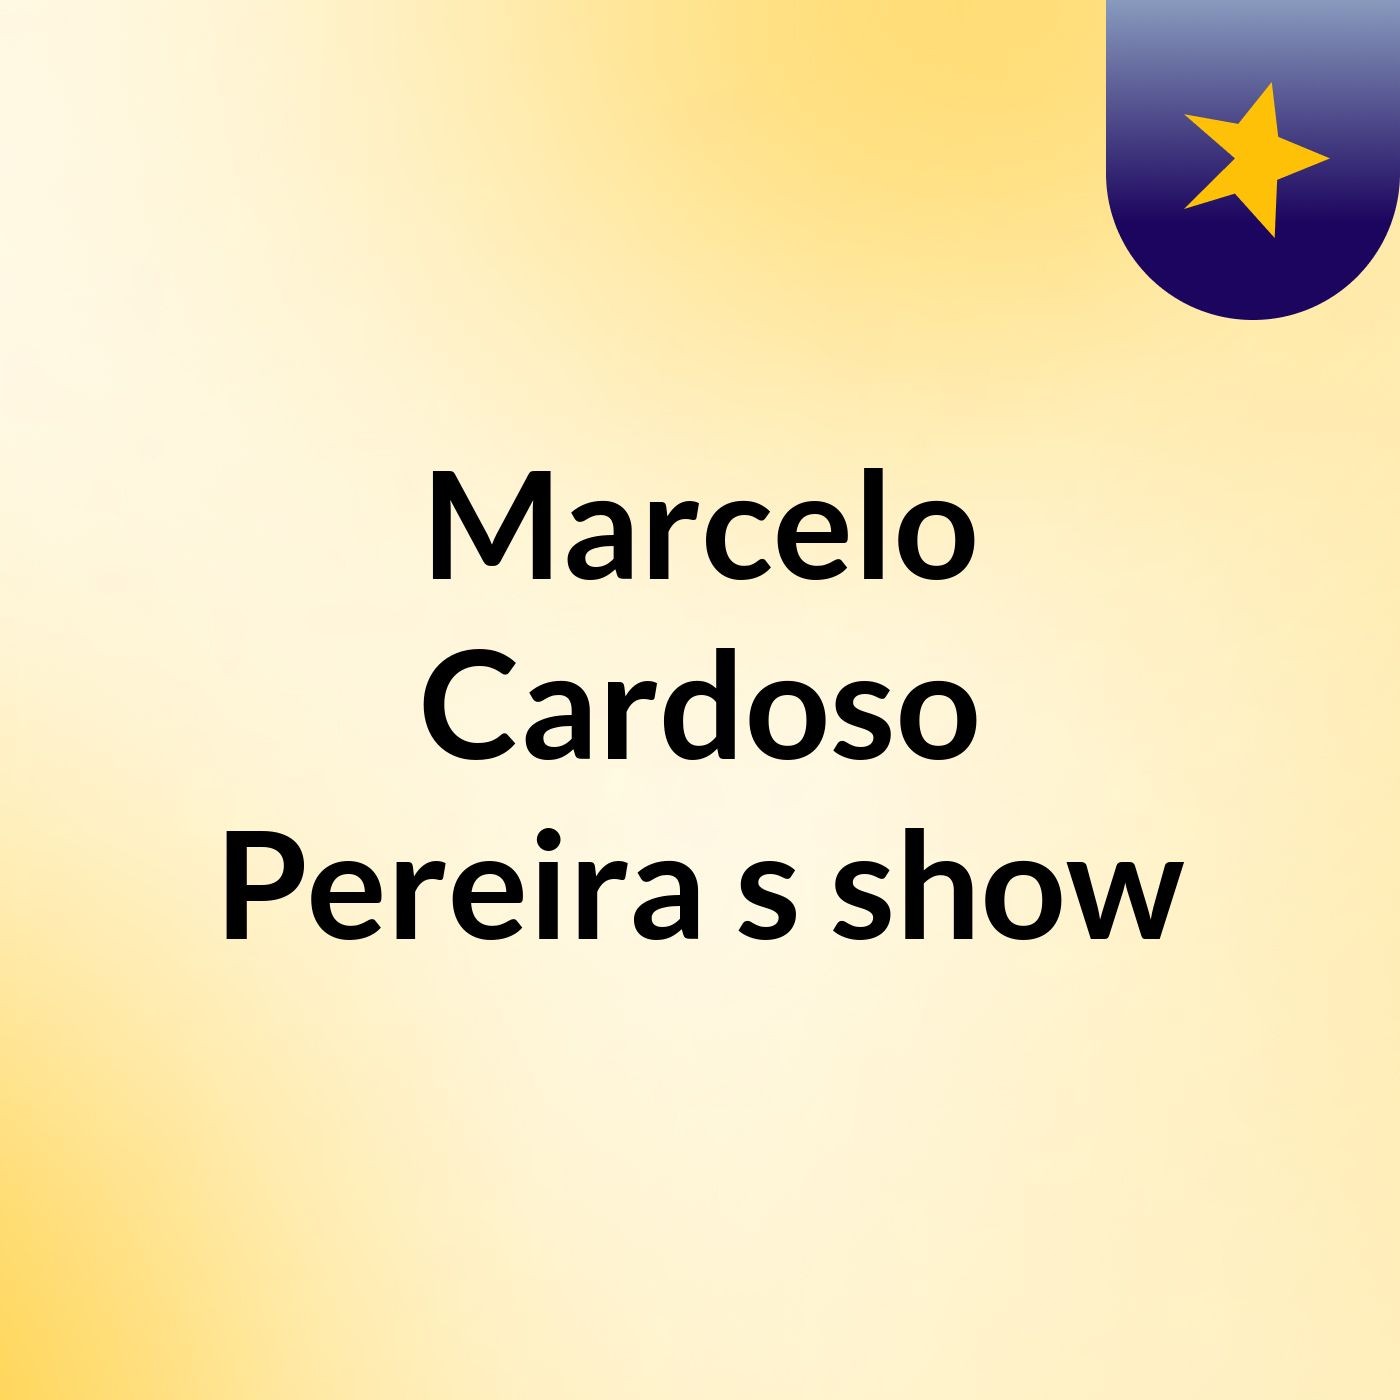 Marcelo Cardoso Pereira's show